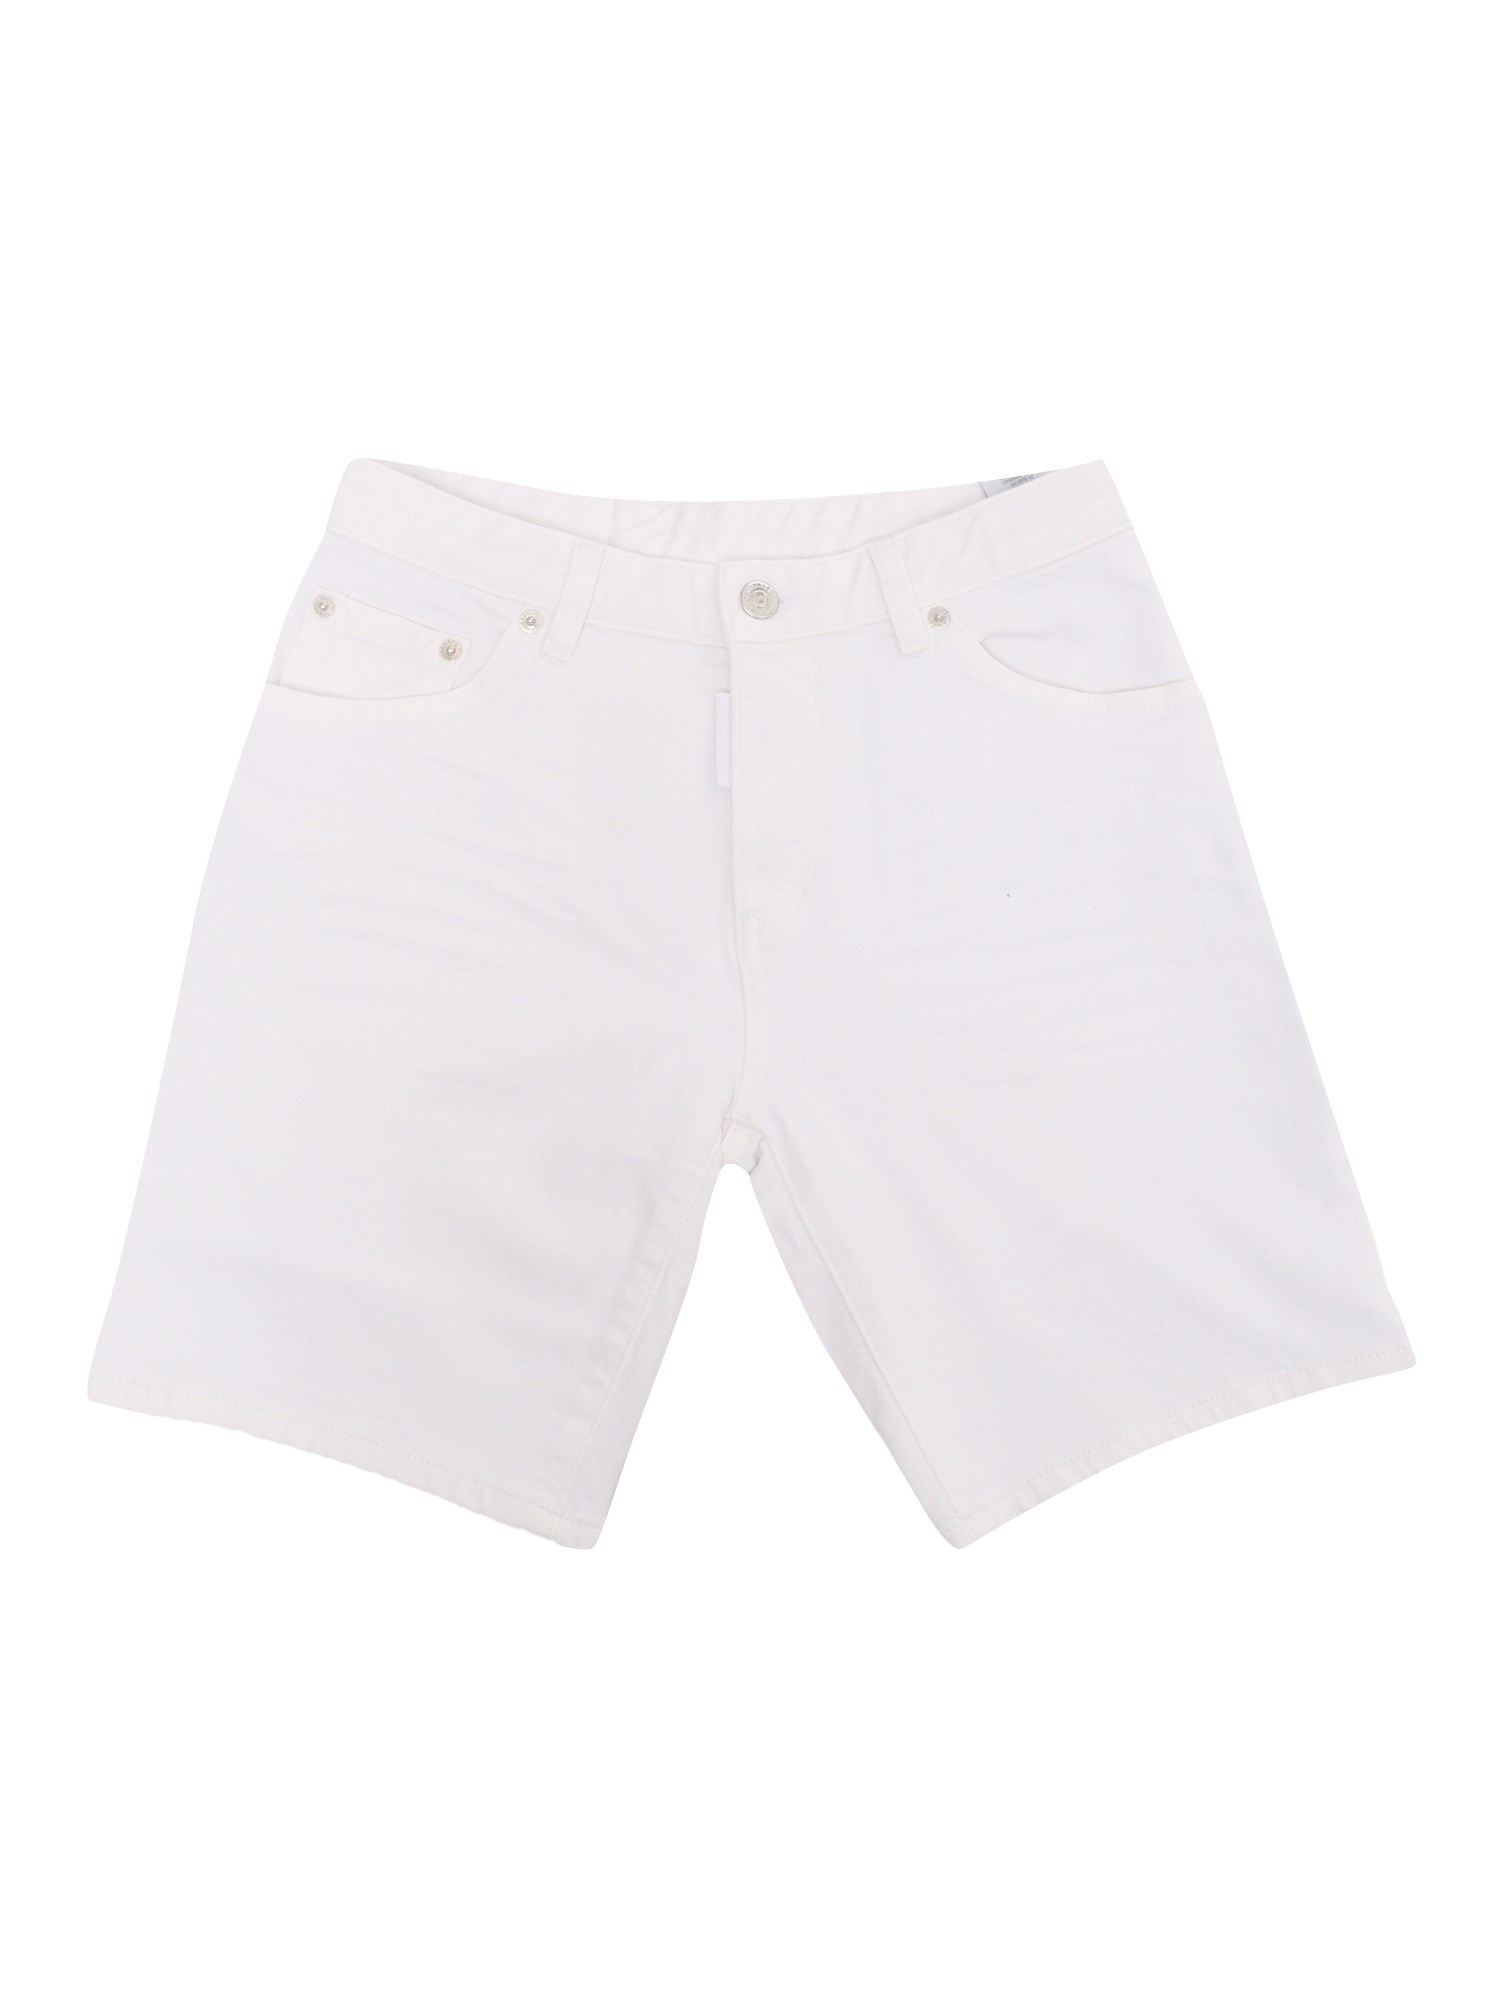 D-squared2 White Shorts